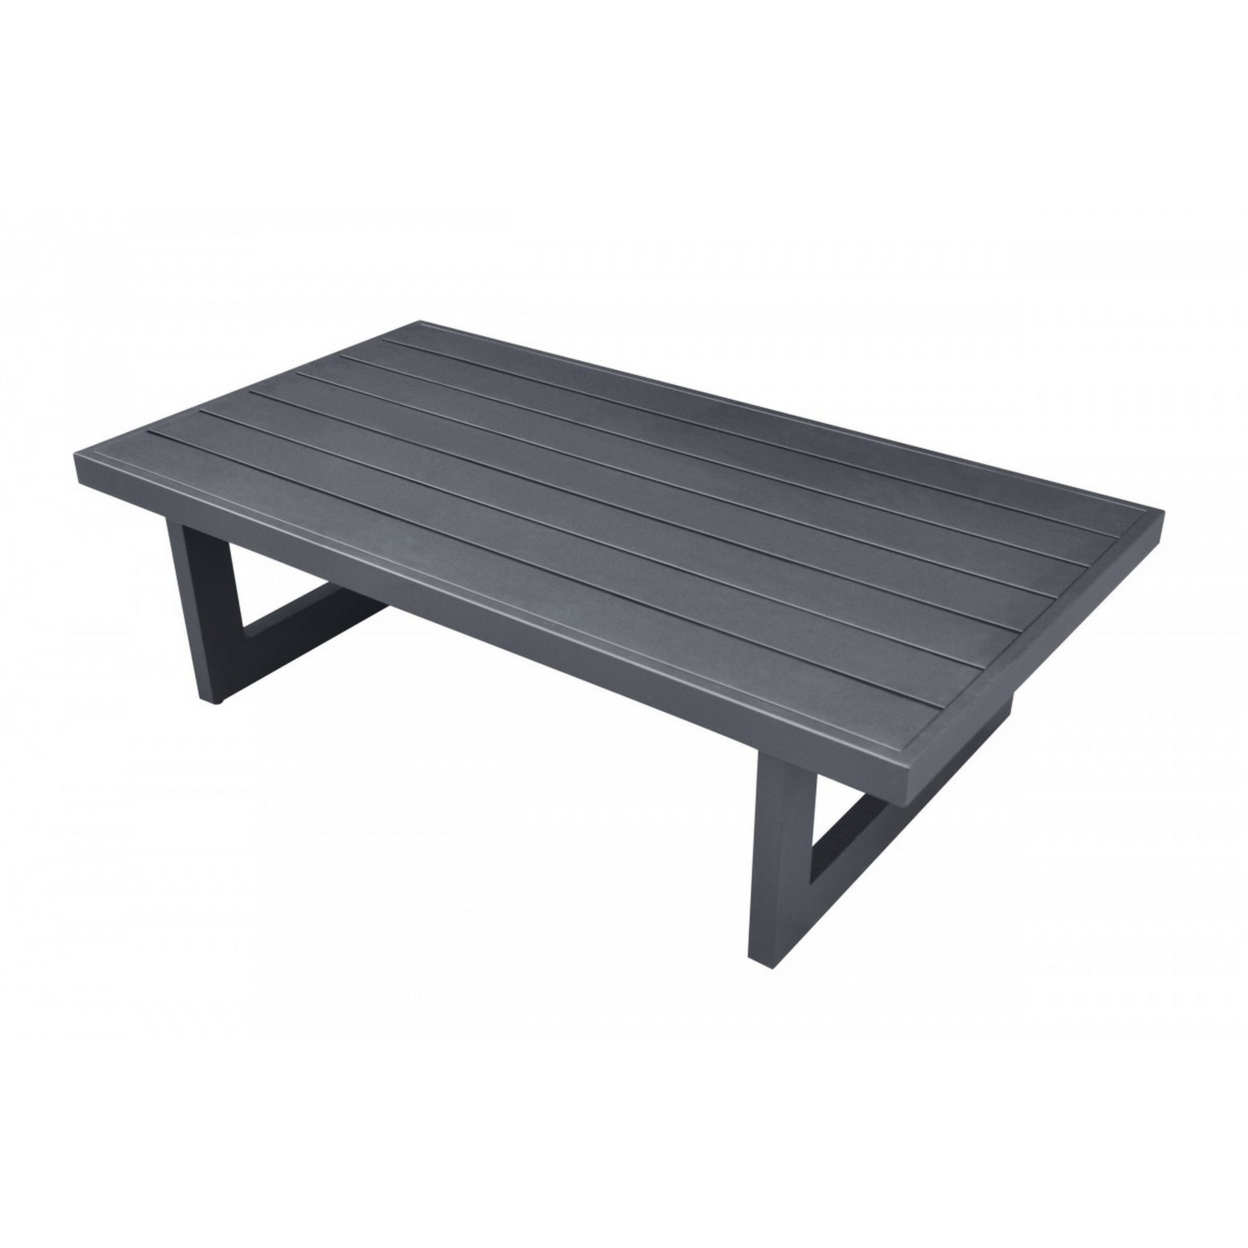 51 Inch Metal Coffee Table With Plank Style Top, Black- Saltoro Sherpi